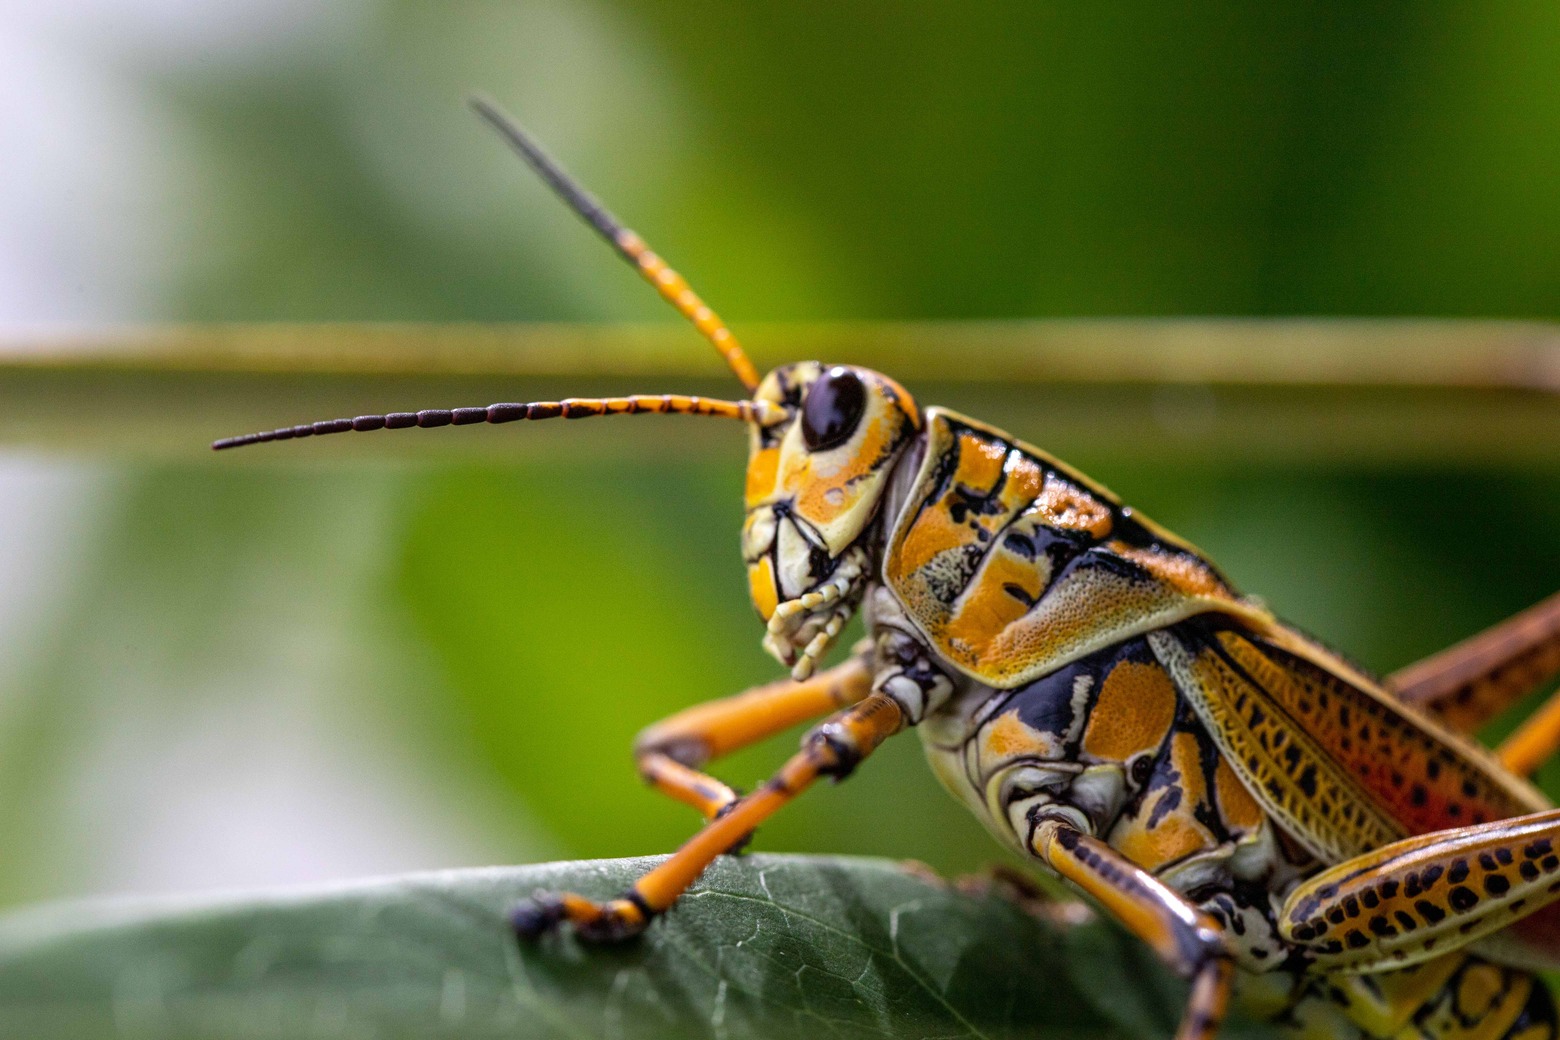 A close-up profile of an orange and black grasshopper on a leaf.